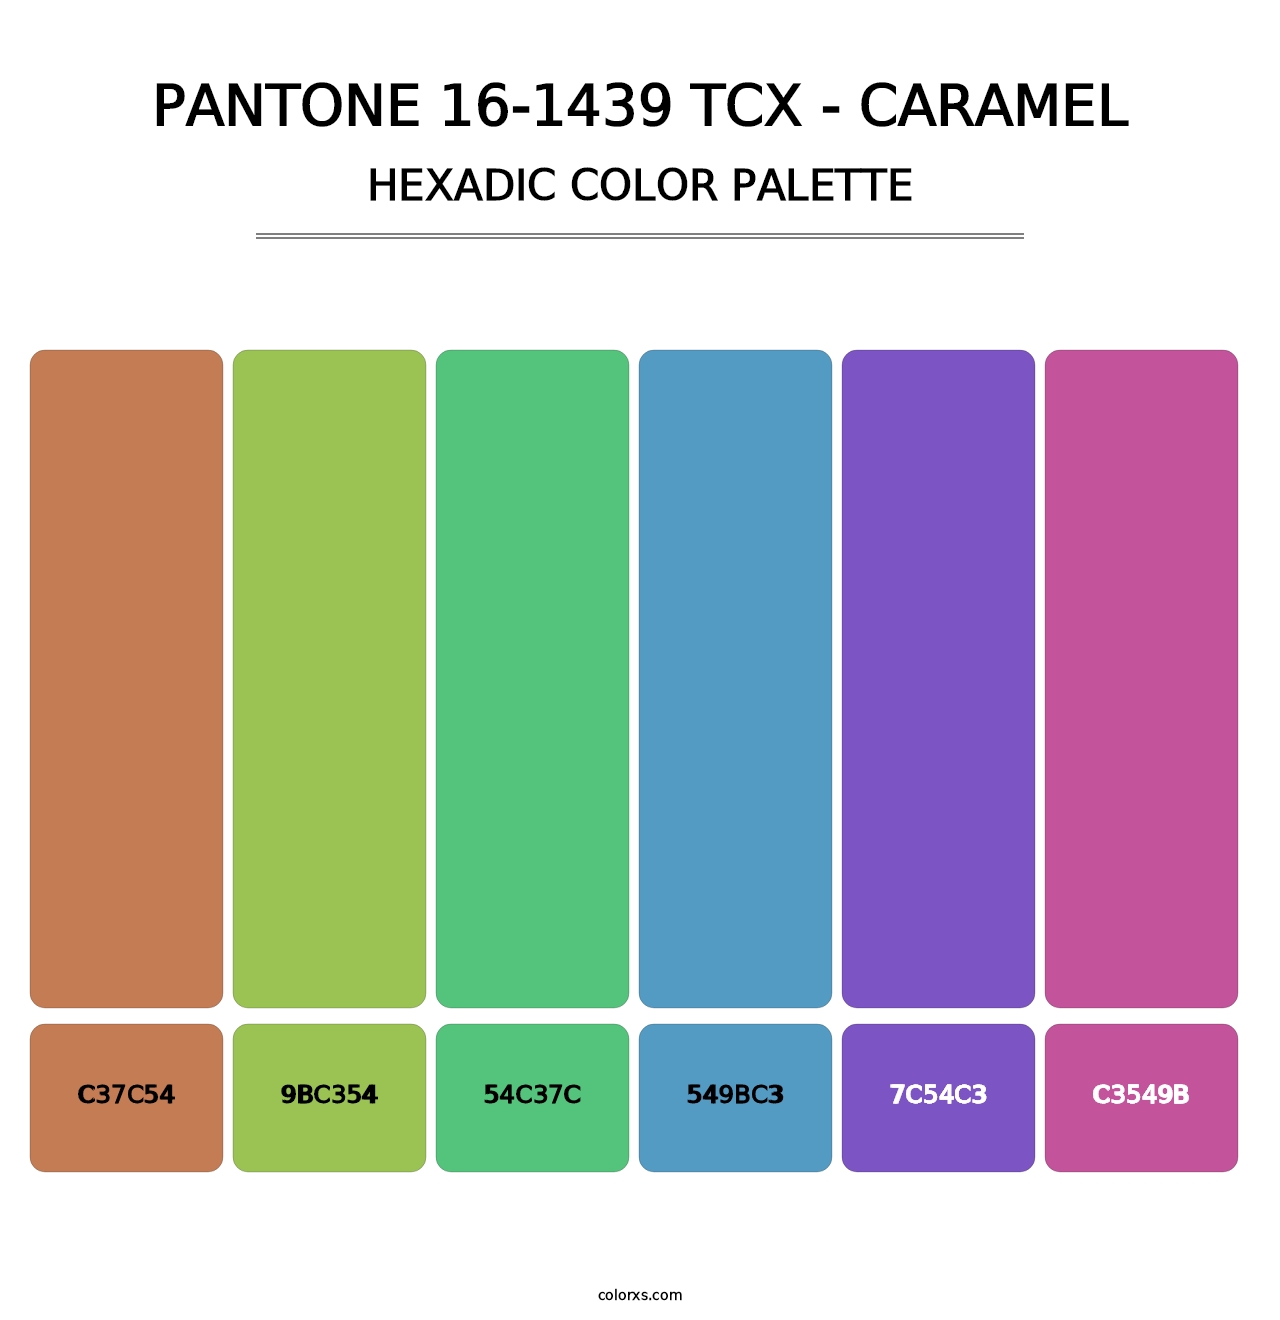 PANTONE 16-1439 TCX - Caramel - Hexadic Color Palette